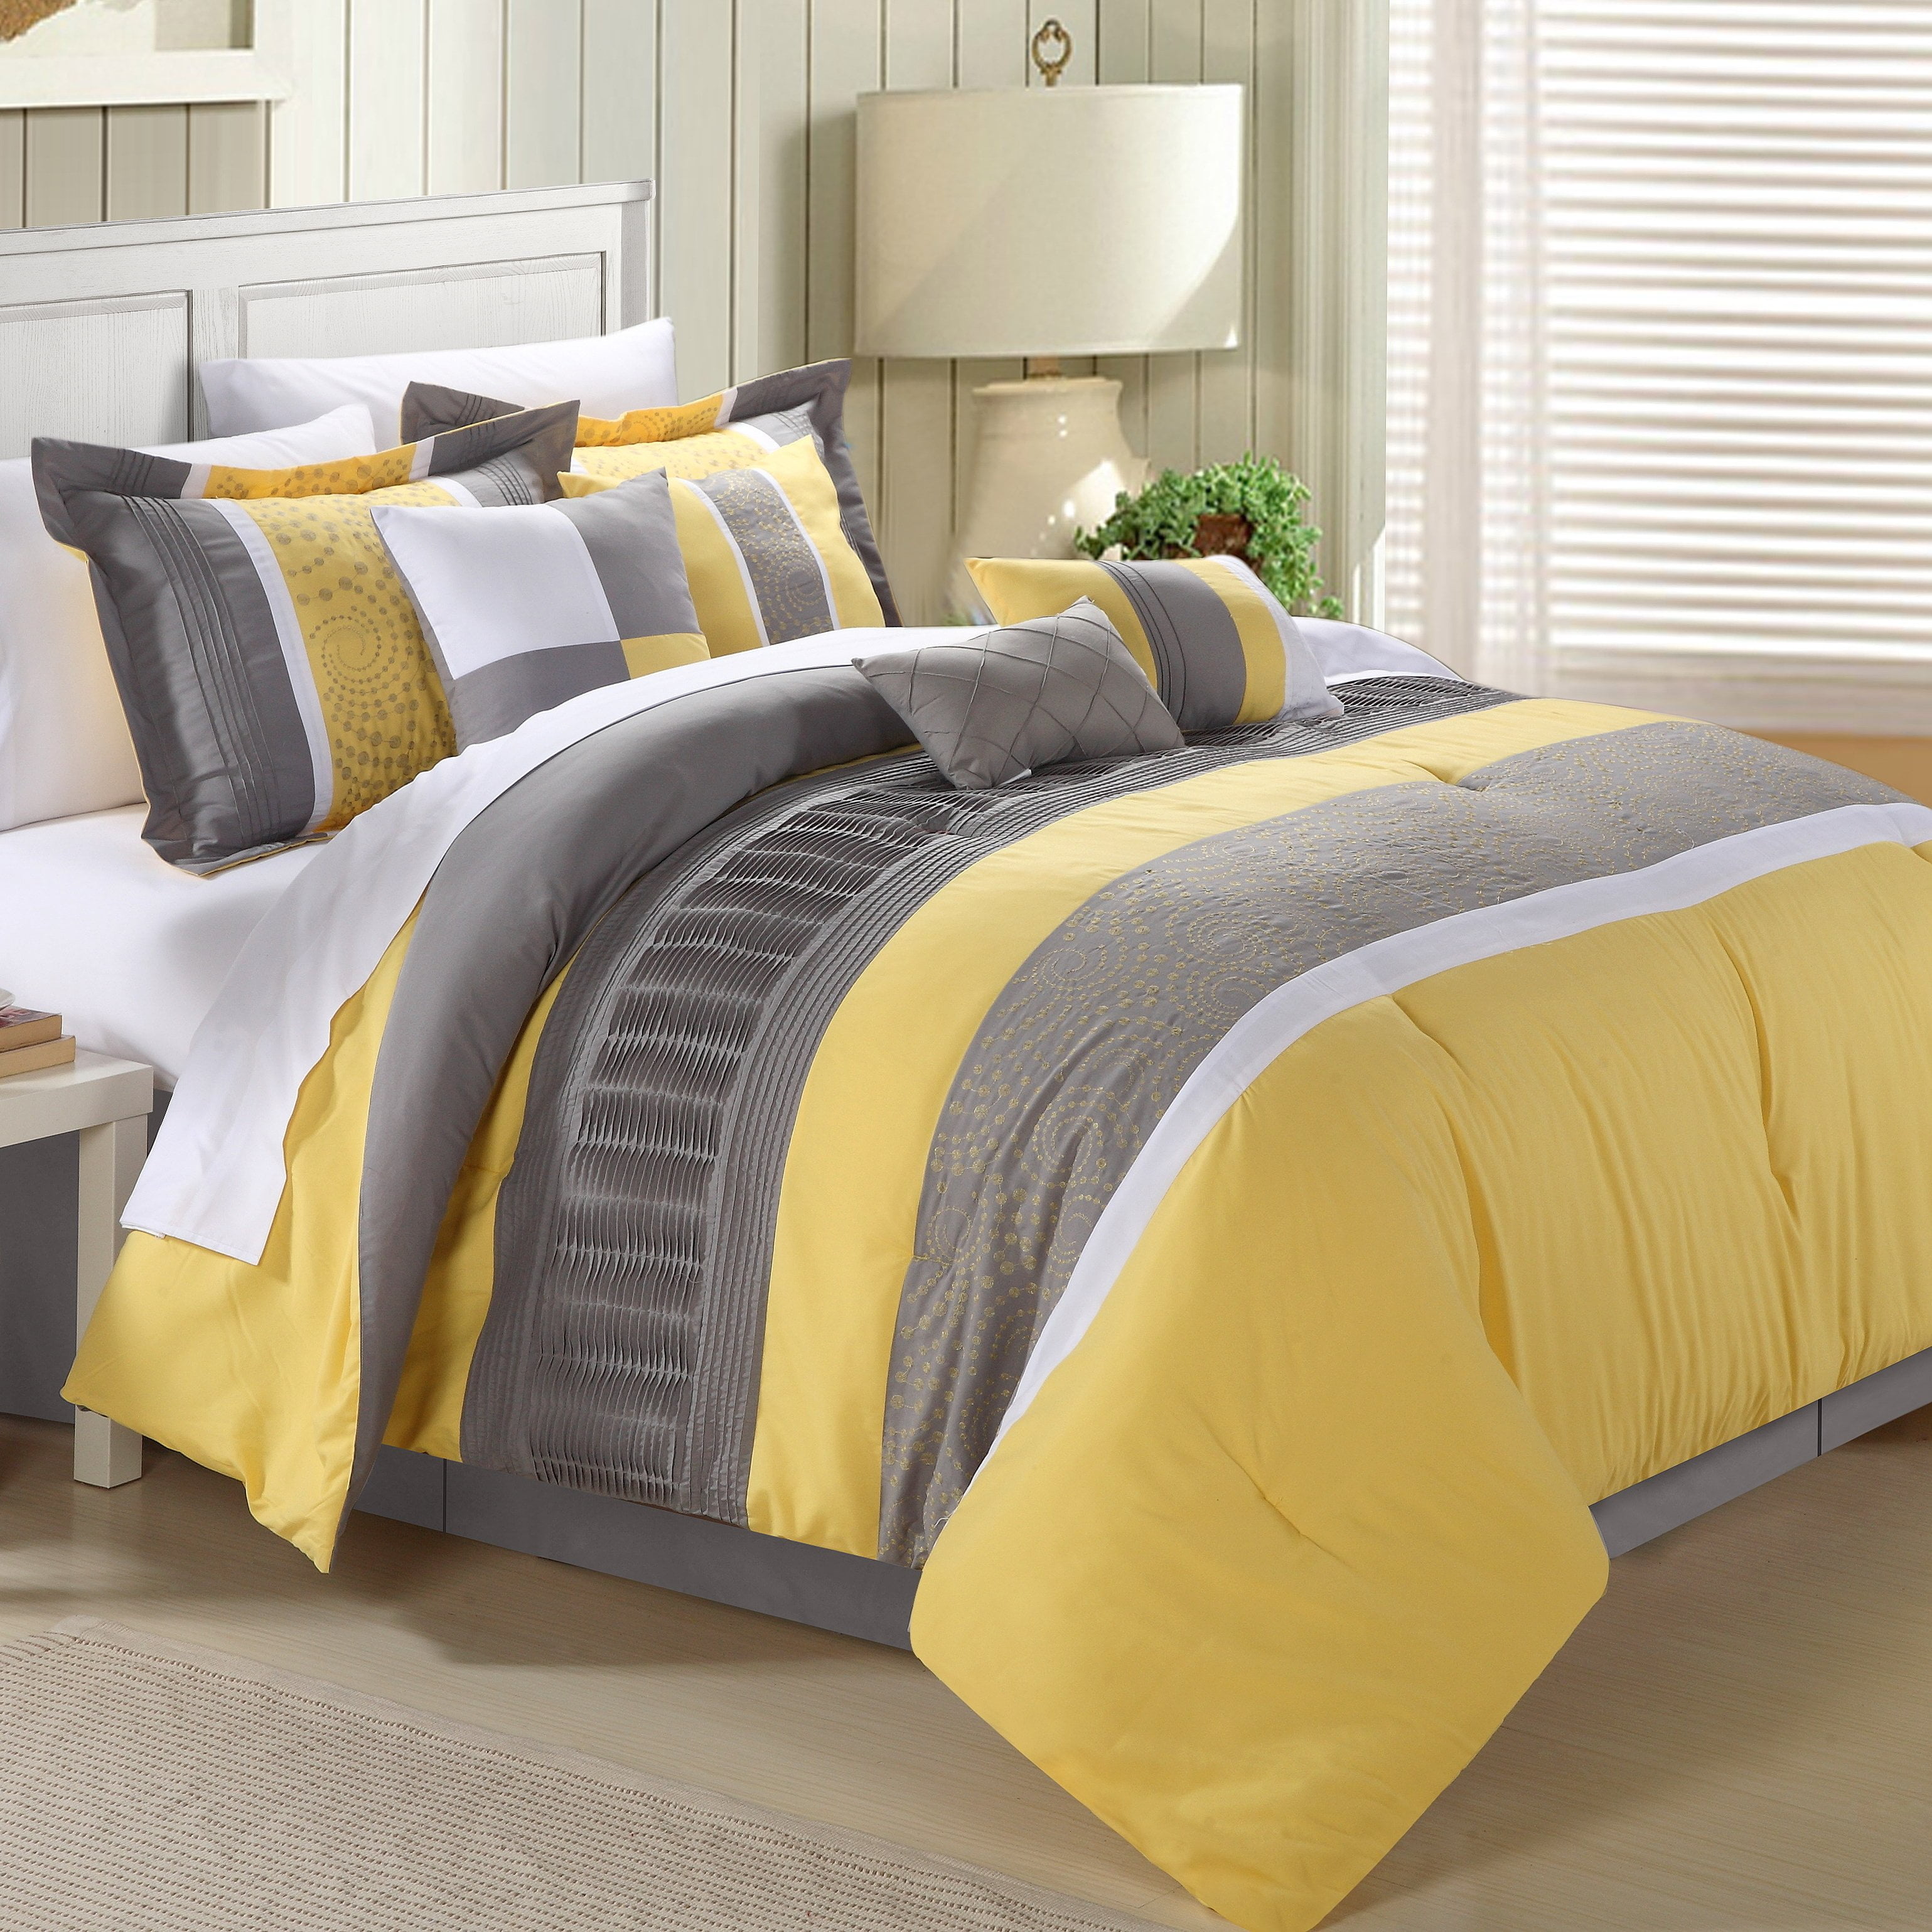 43ck111-us Euphoria Embroidered Comforter Set - Yellow - King - 8 Piece